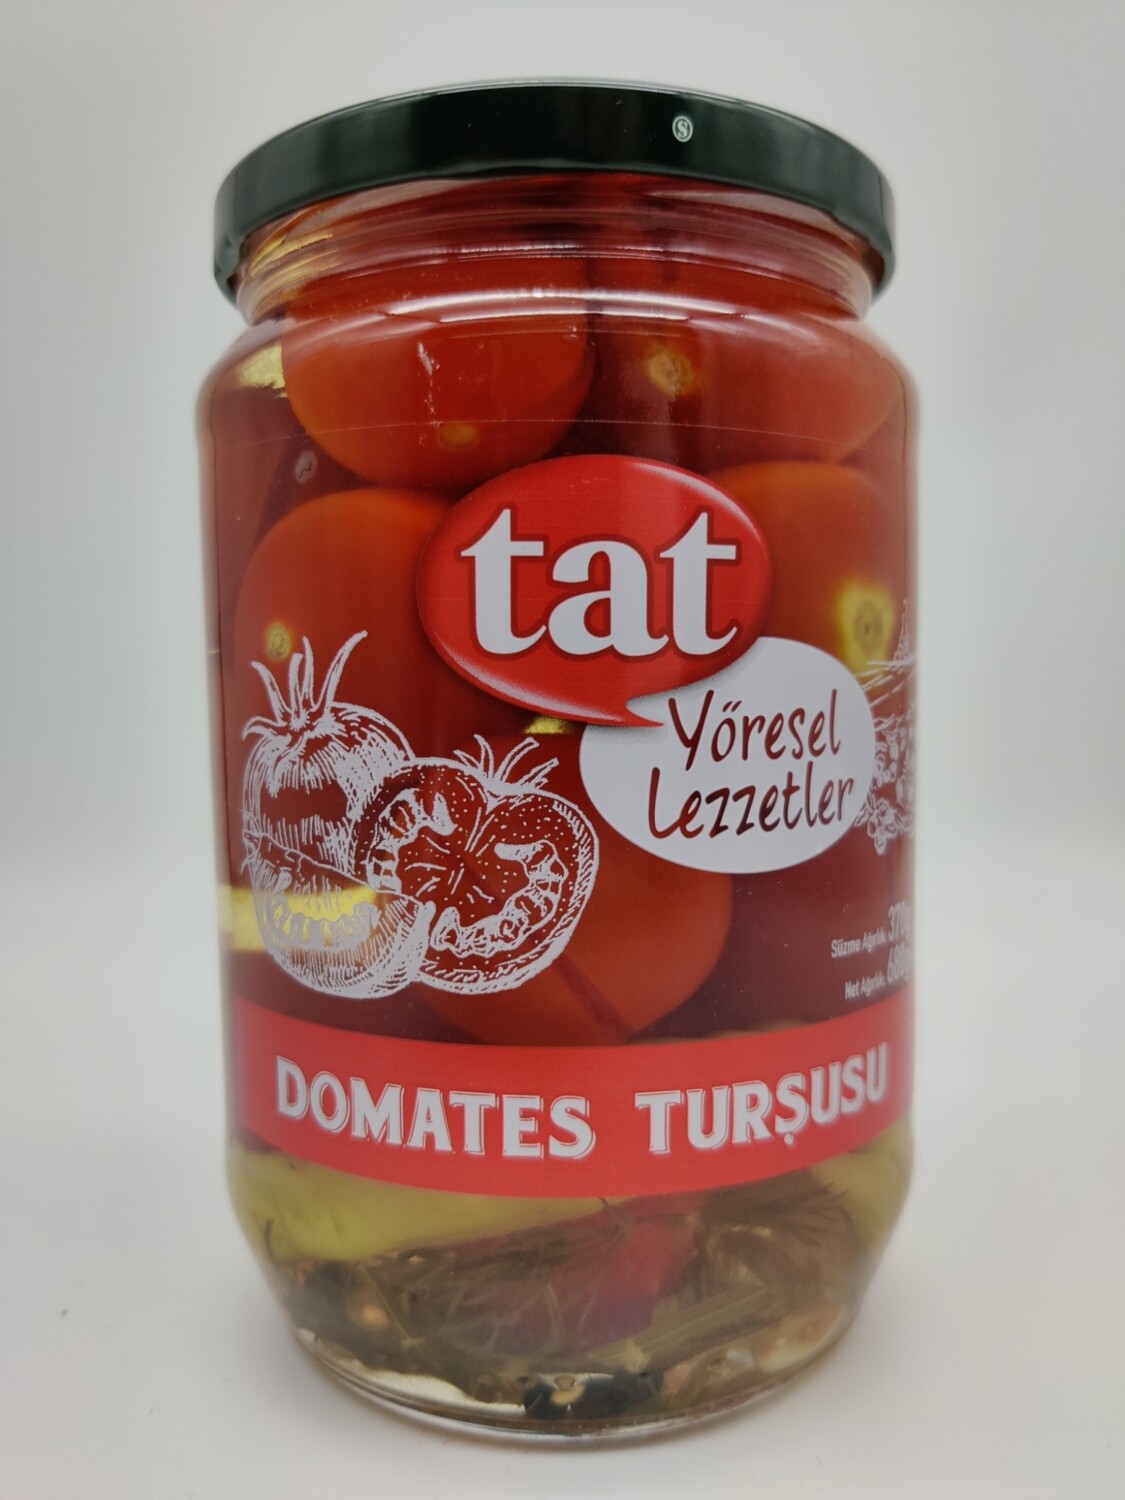 TAT Whole Tomato Pickles Domates Tursusu 680g